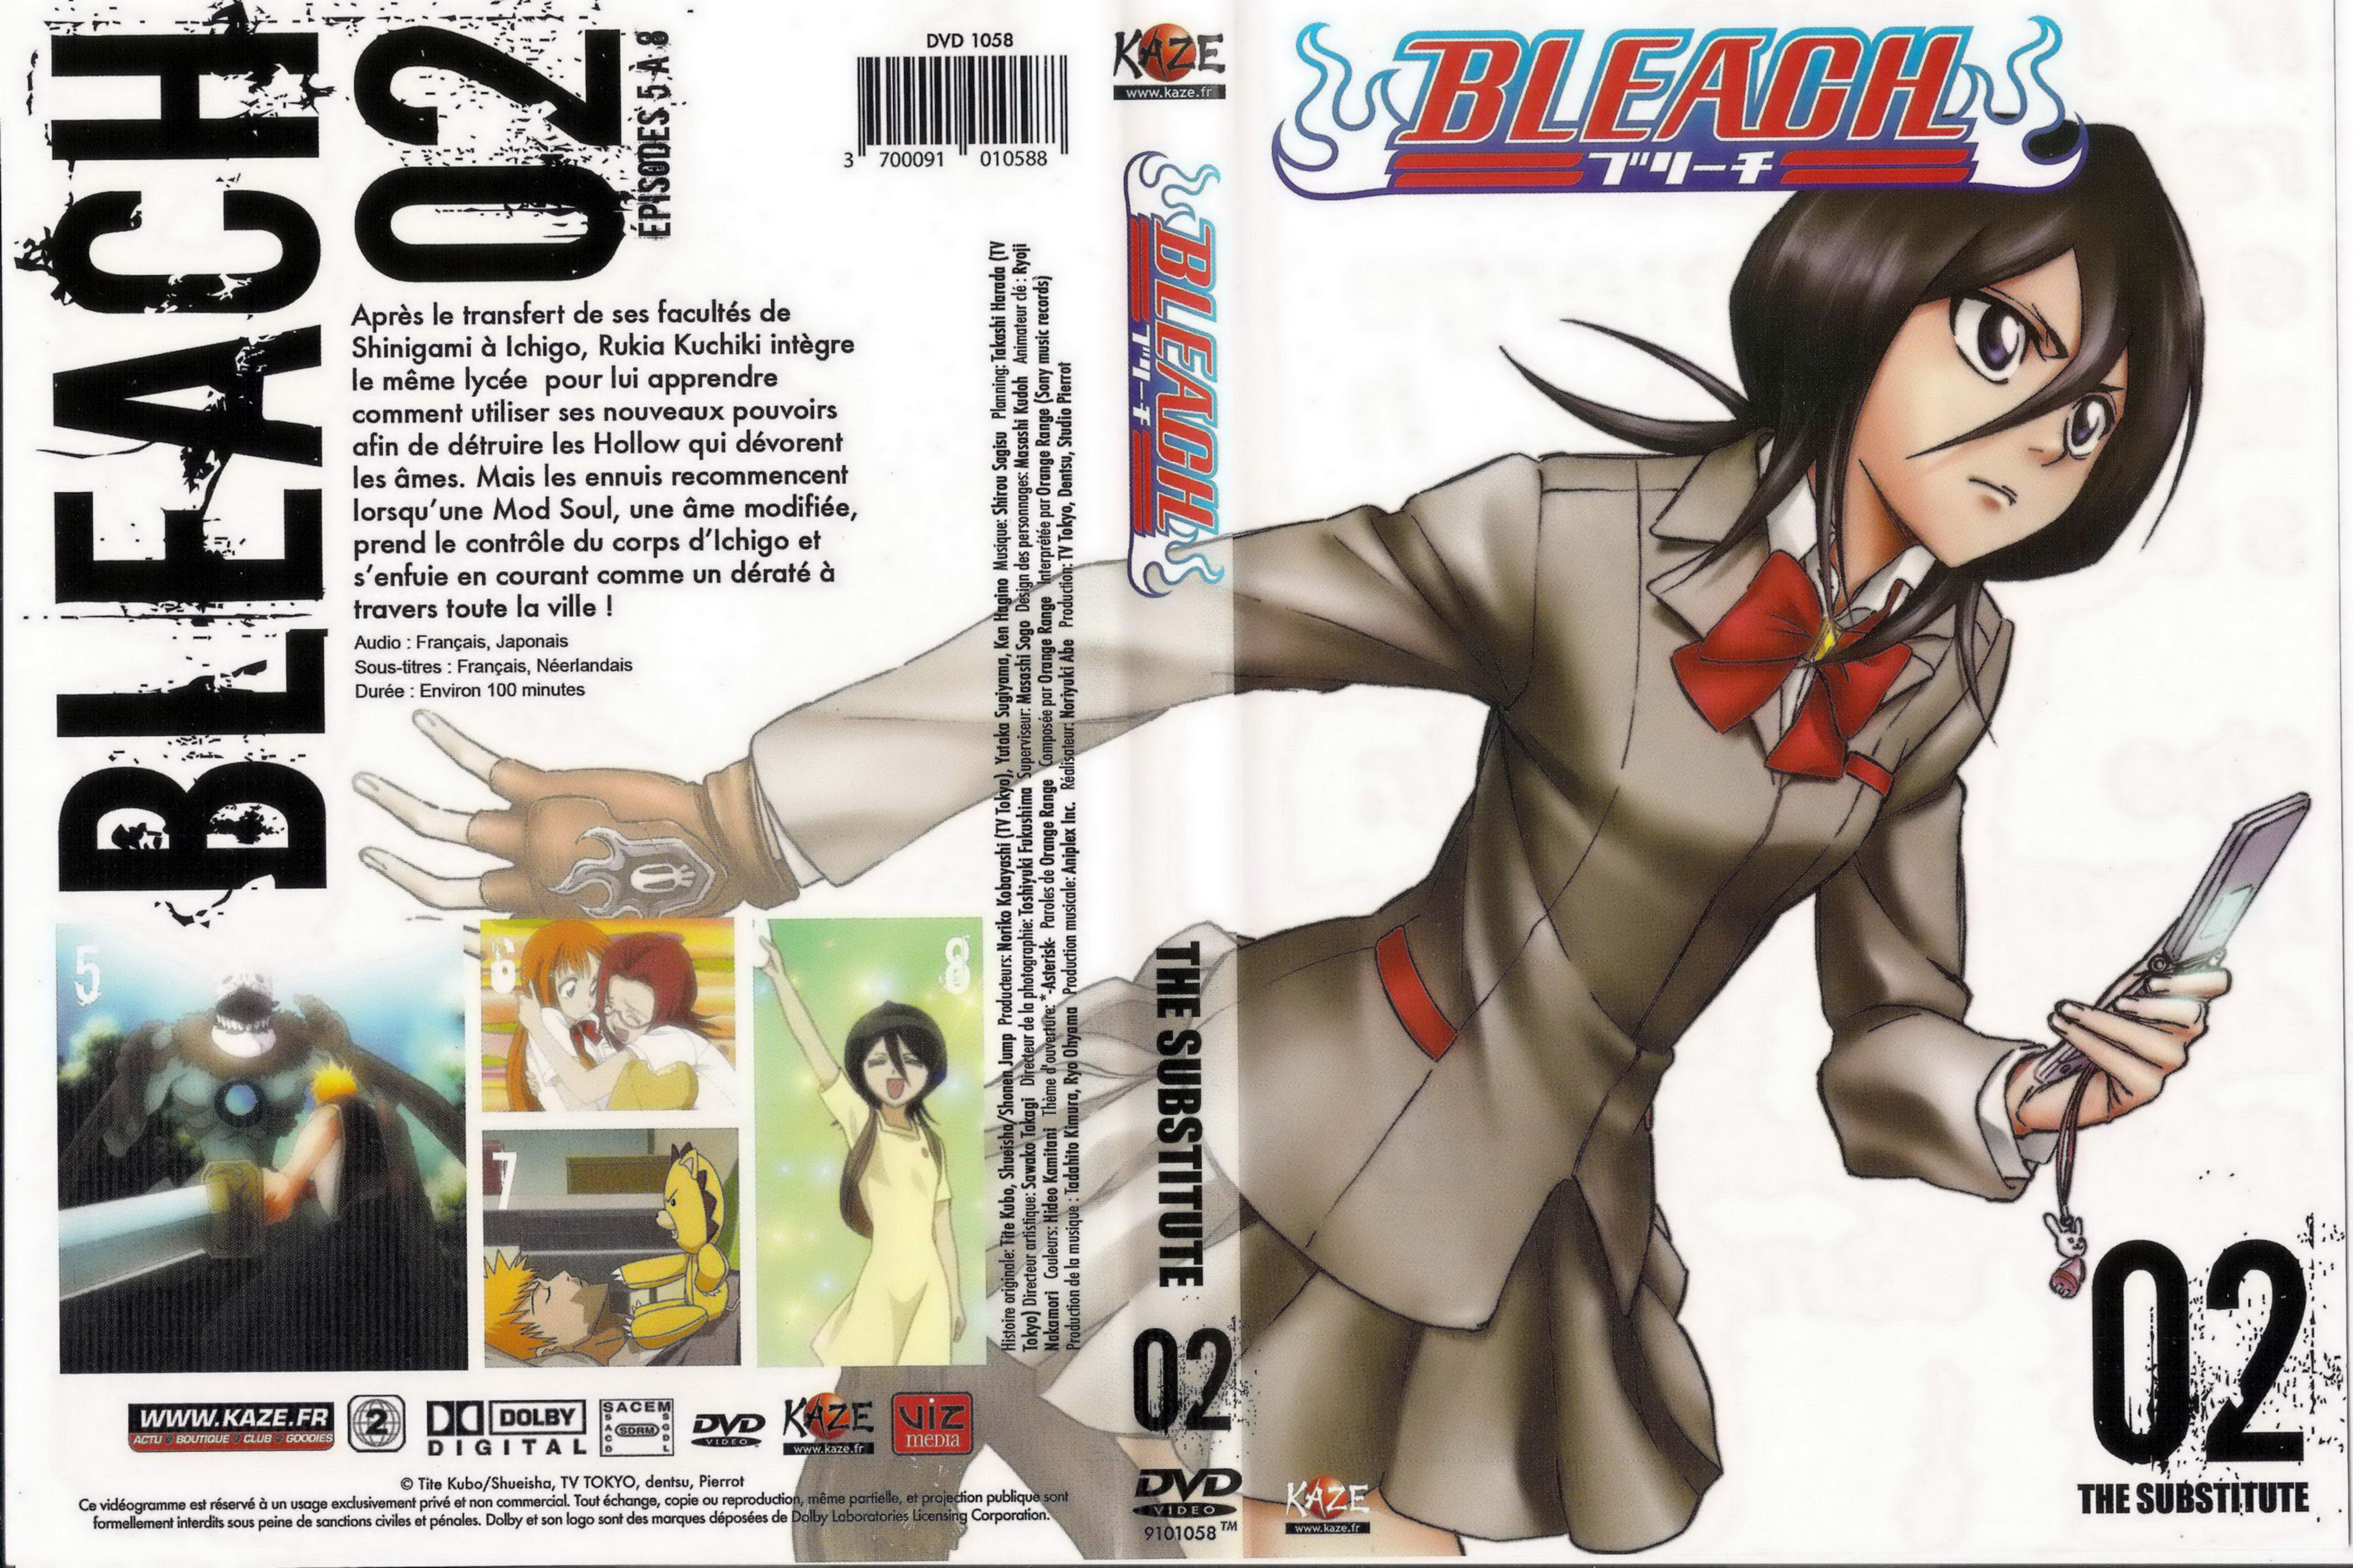 Jaquette DVD Bleach vol 02